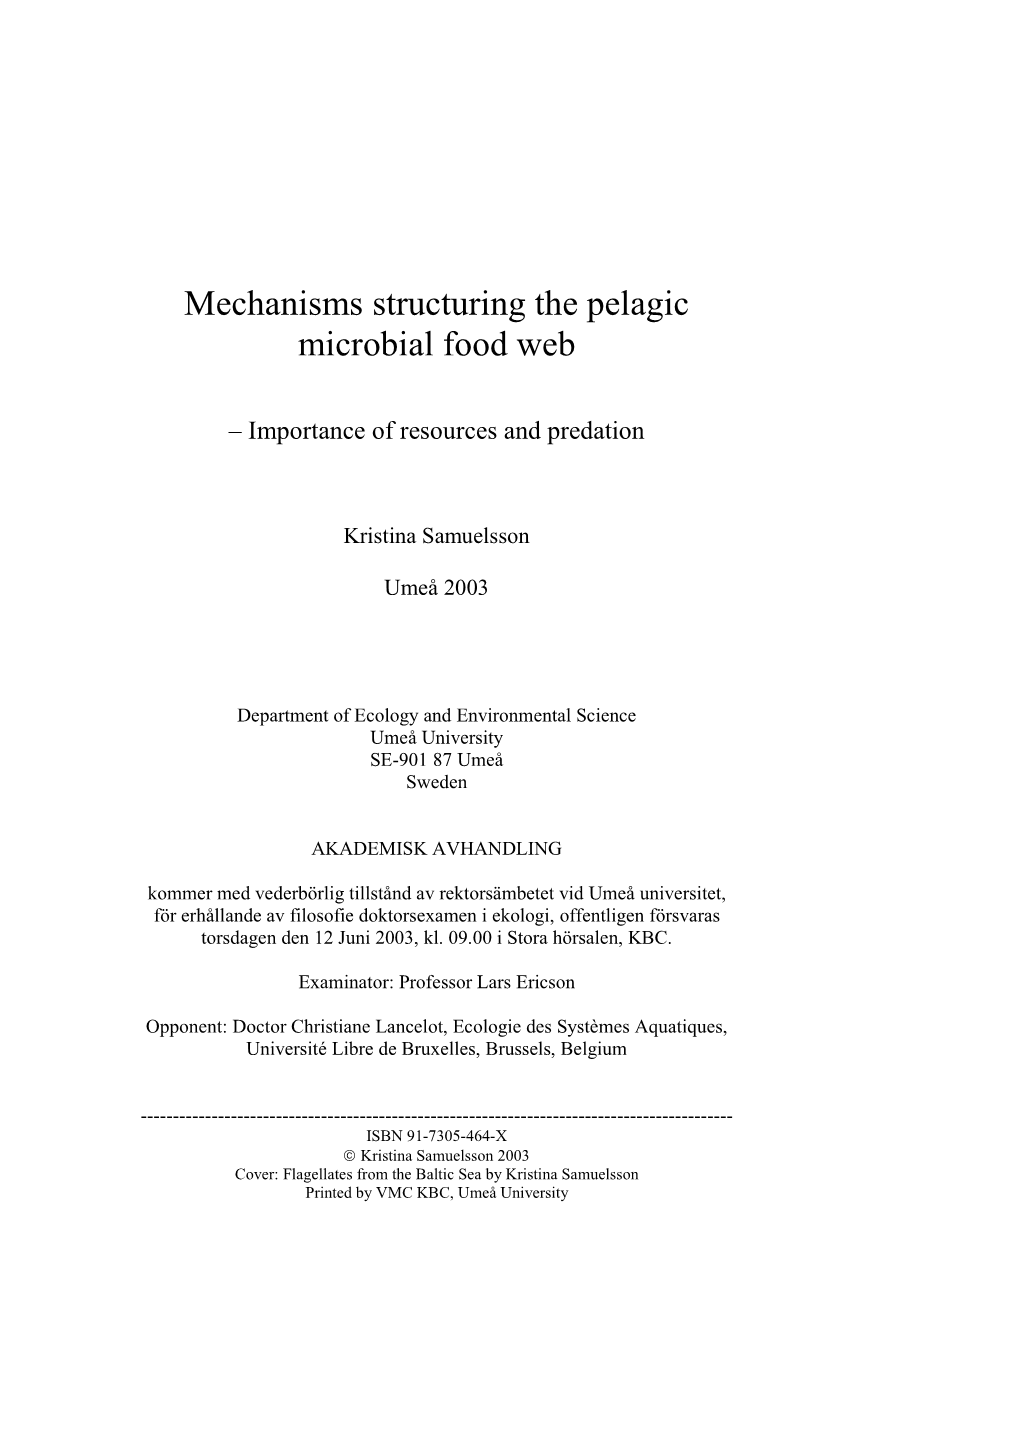 mechanisms-structuring-the-pelagic-microbial-food-web-docslib